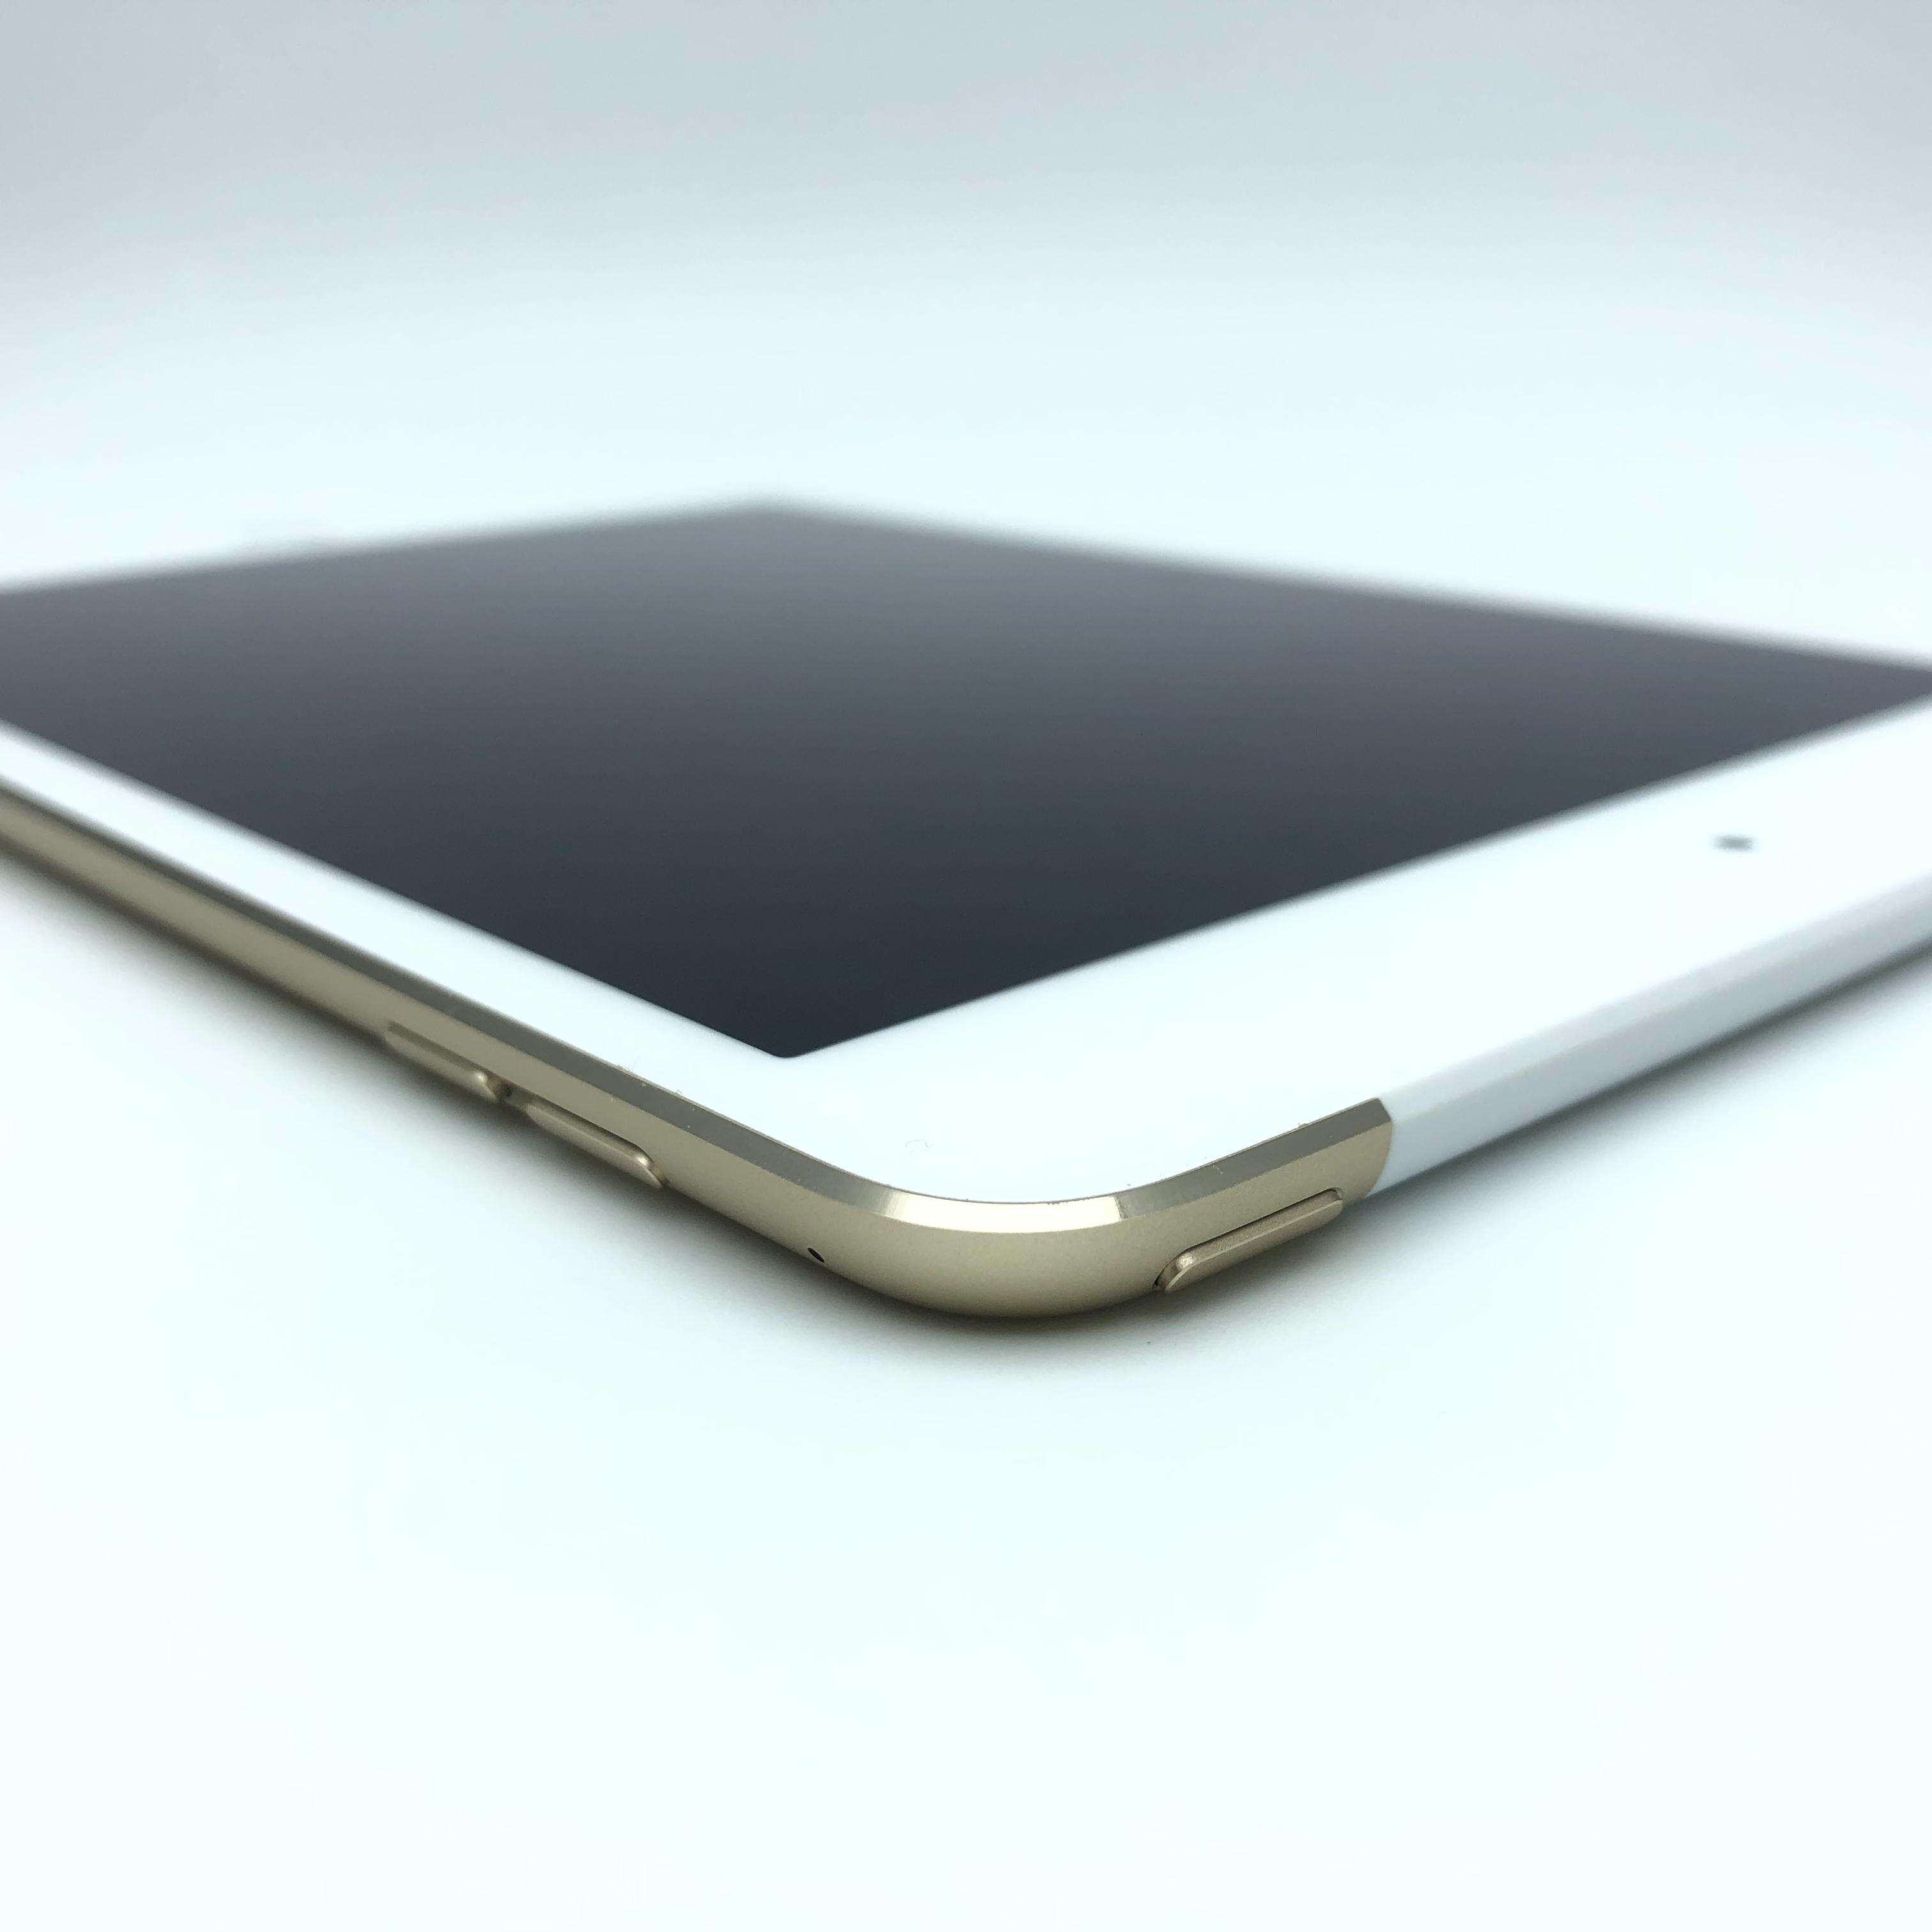 iPad mini 4 128G 金色 Cellular版